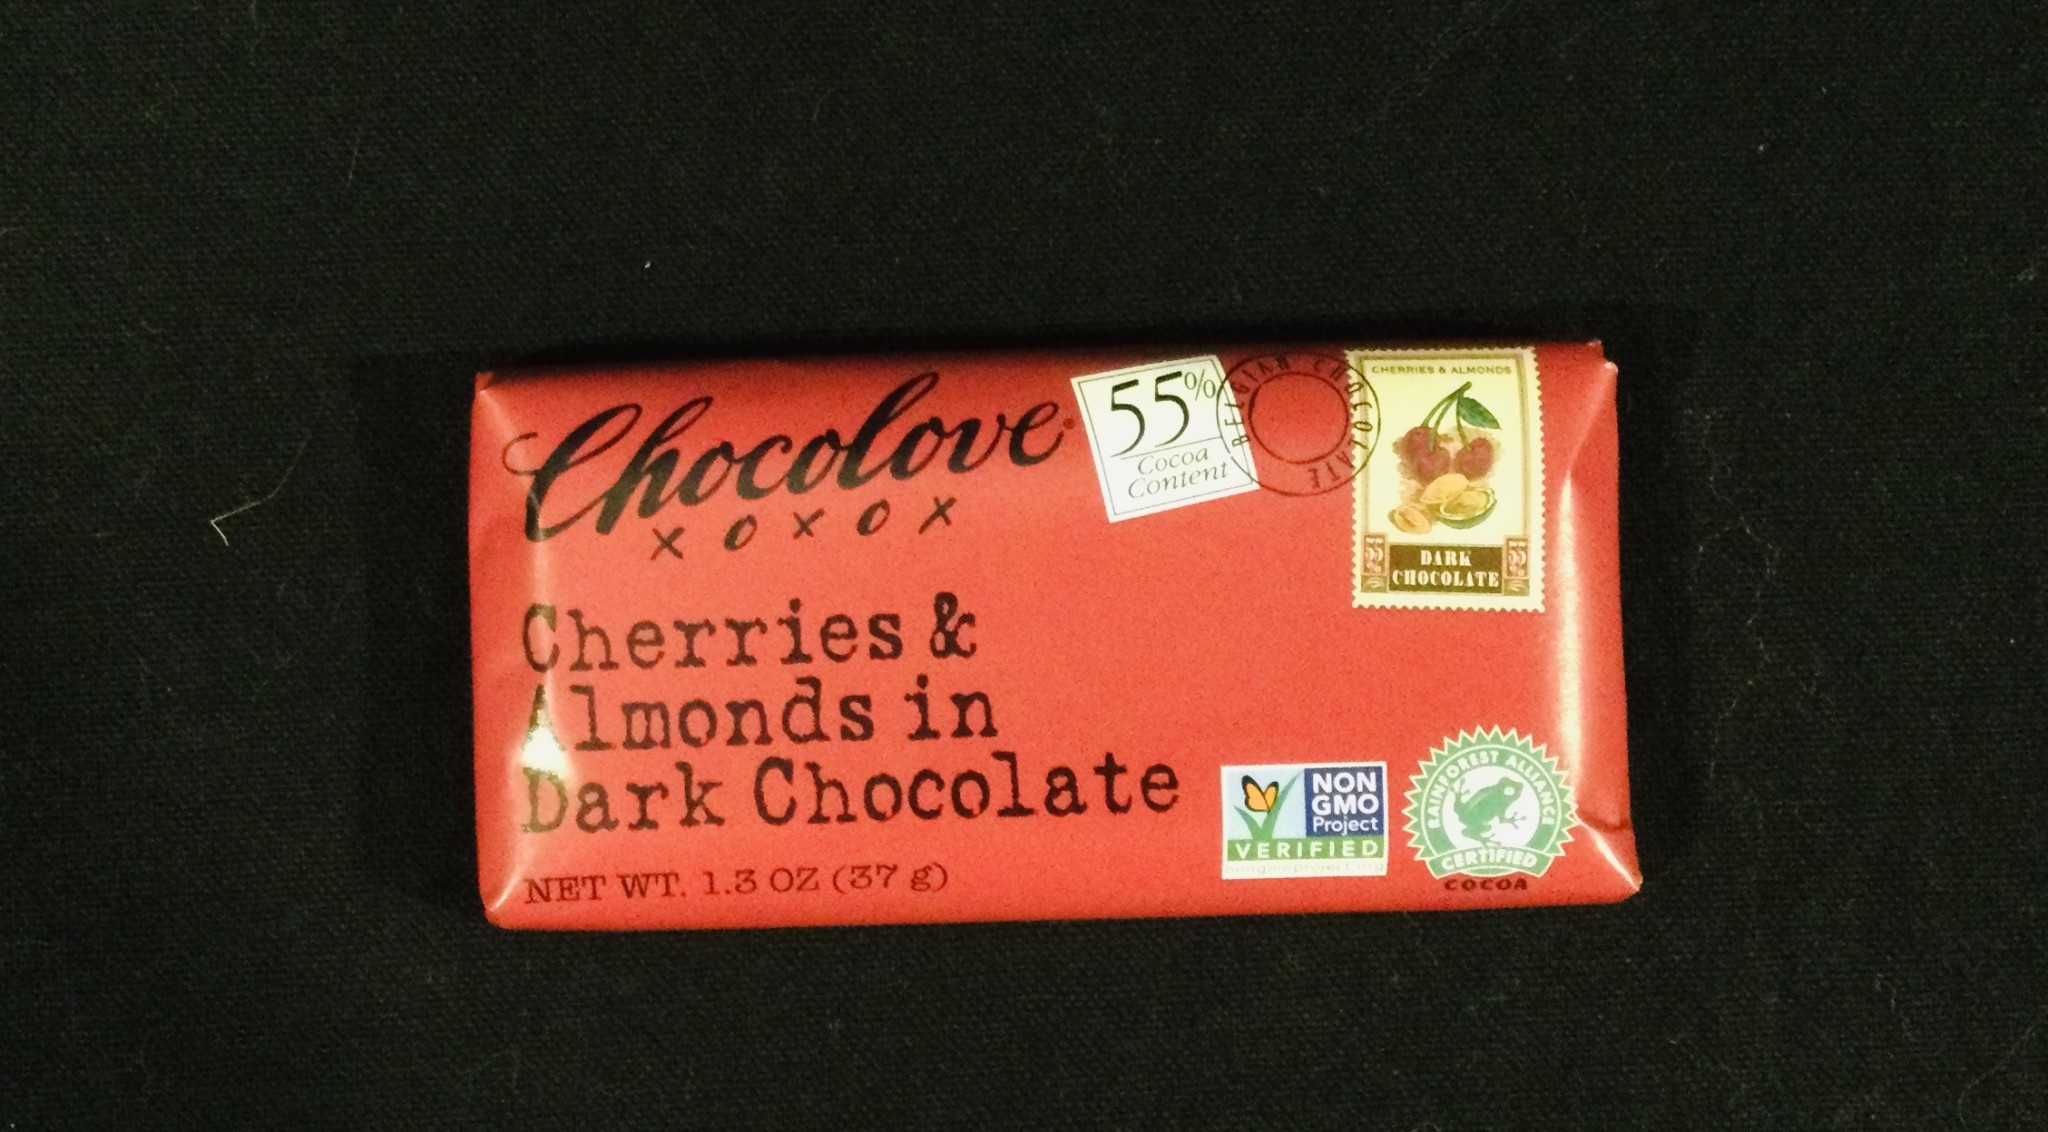 Chocolate chocolov cherry almond dark mini bars